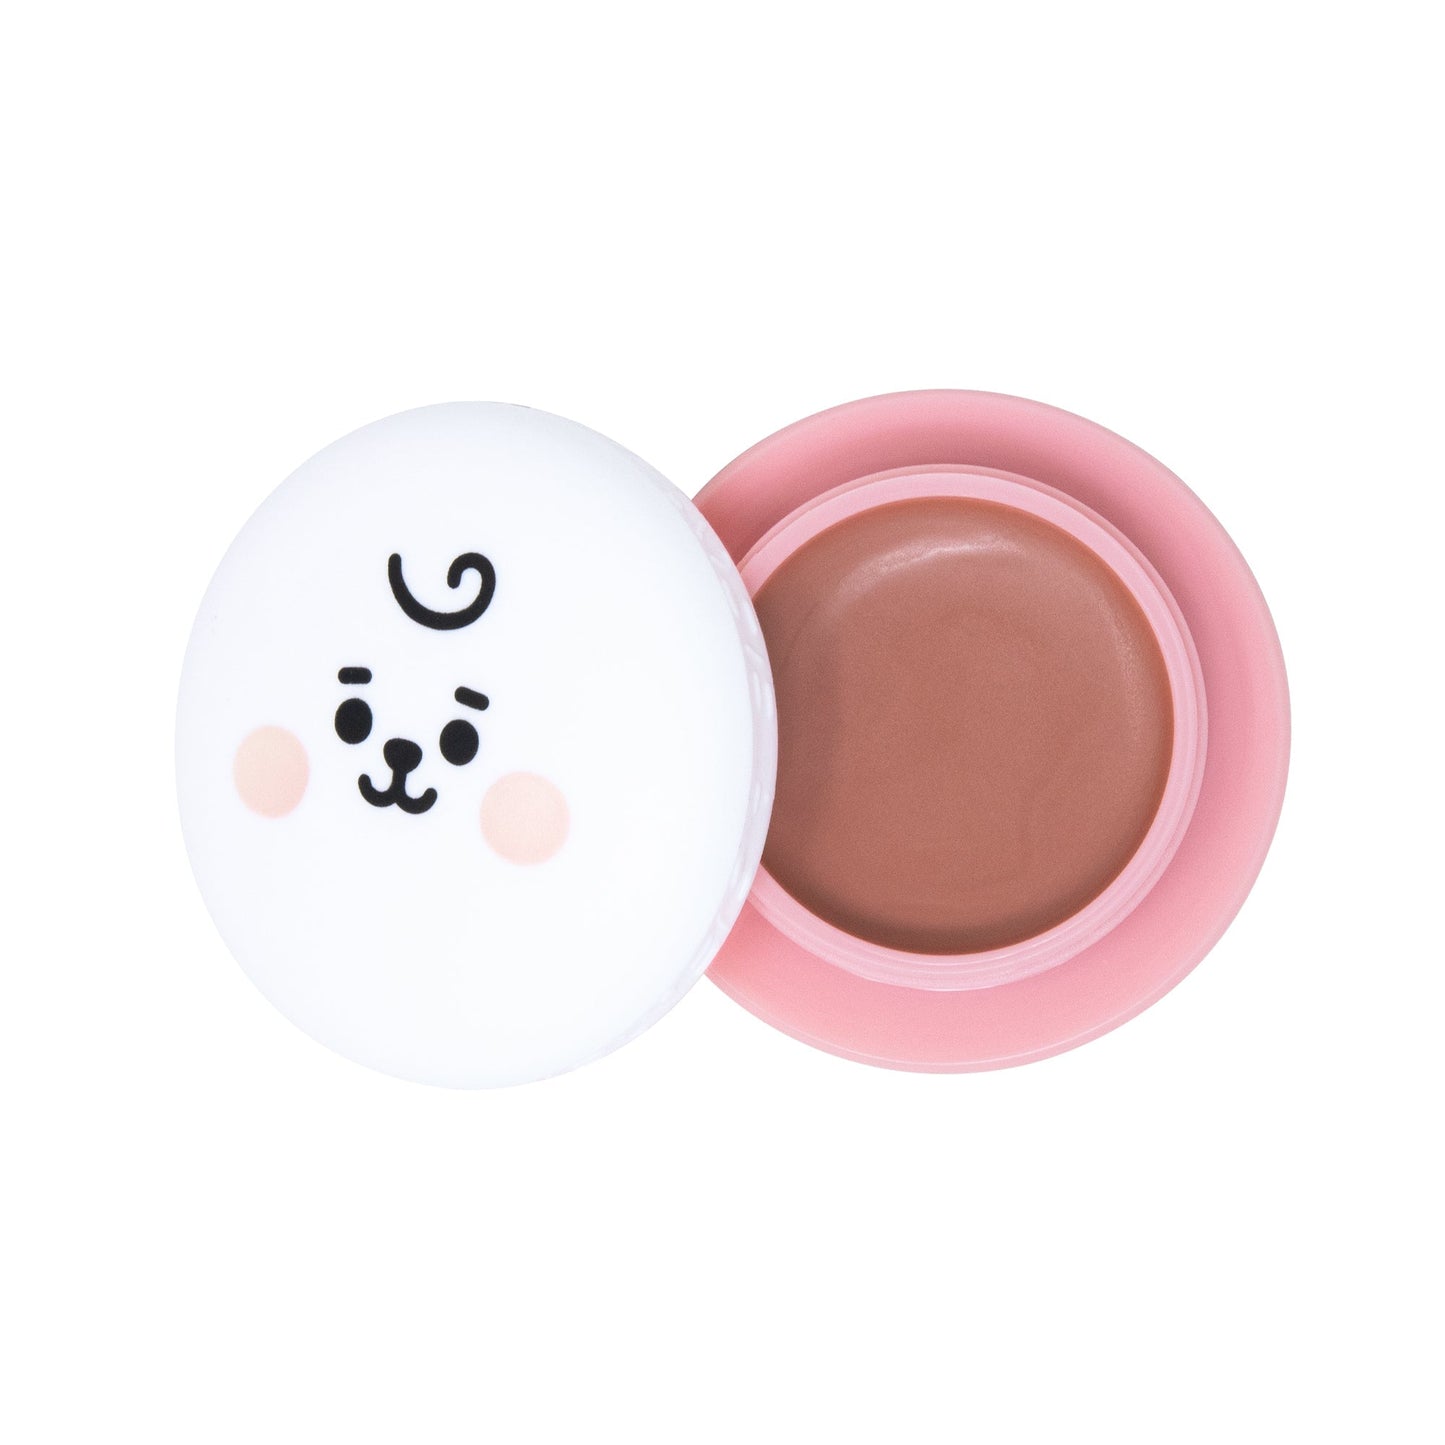 Hello Kitty & BT21 RJ Moisturizing Macaron Lip Balm Duo, Honeydew flavored